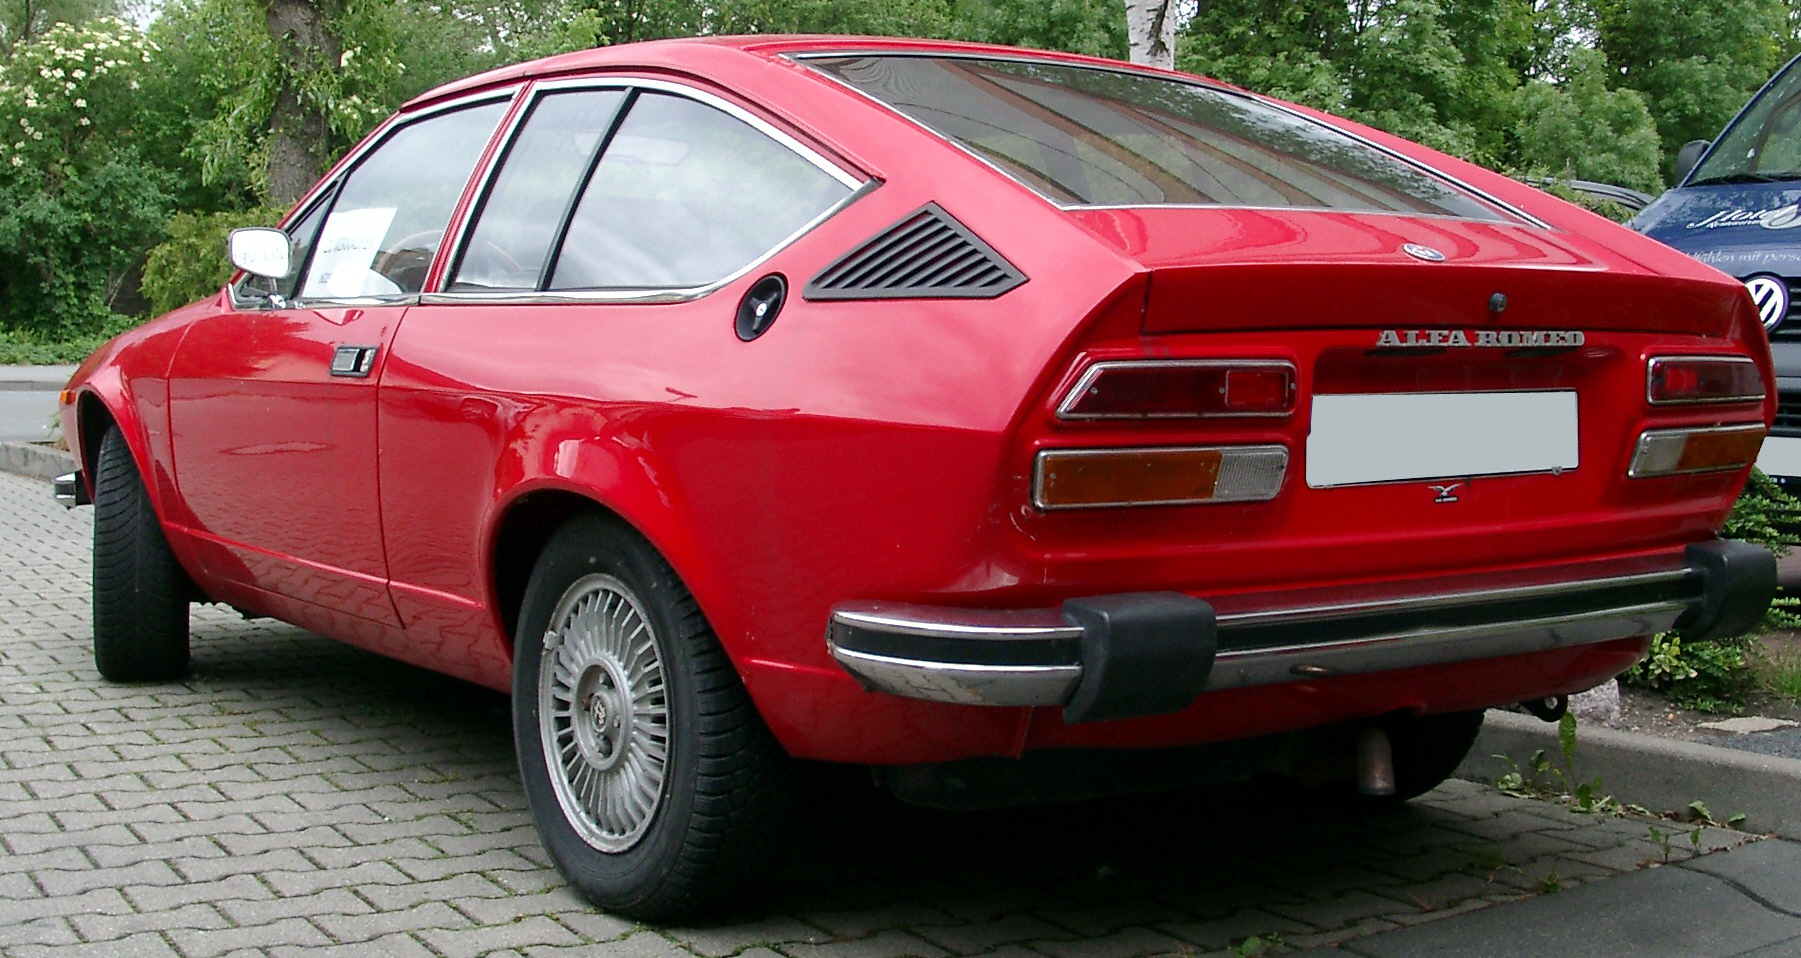 Dossier: Alfa Romeo GTV coupÃ© rear 20070516.jpg - Wikimedia Commons